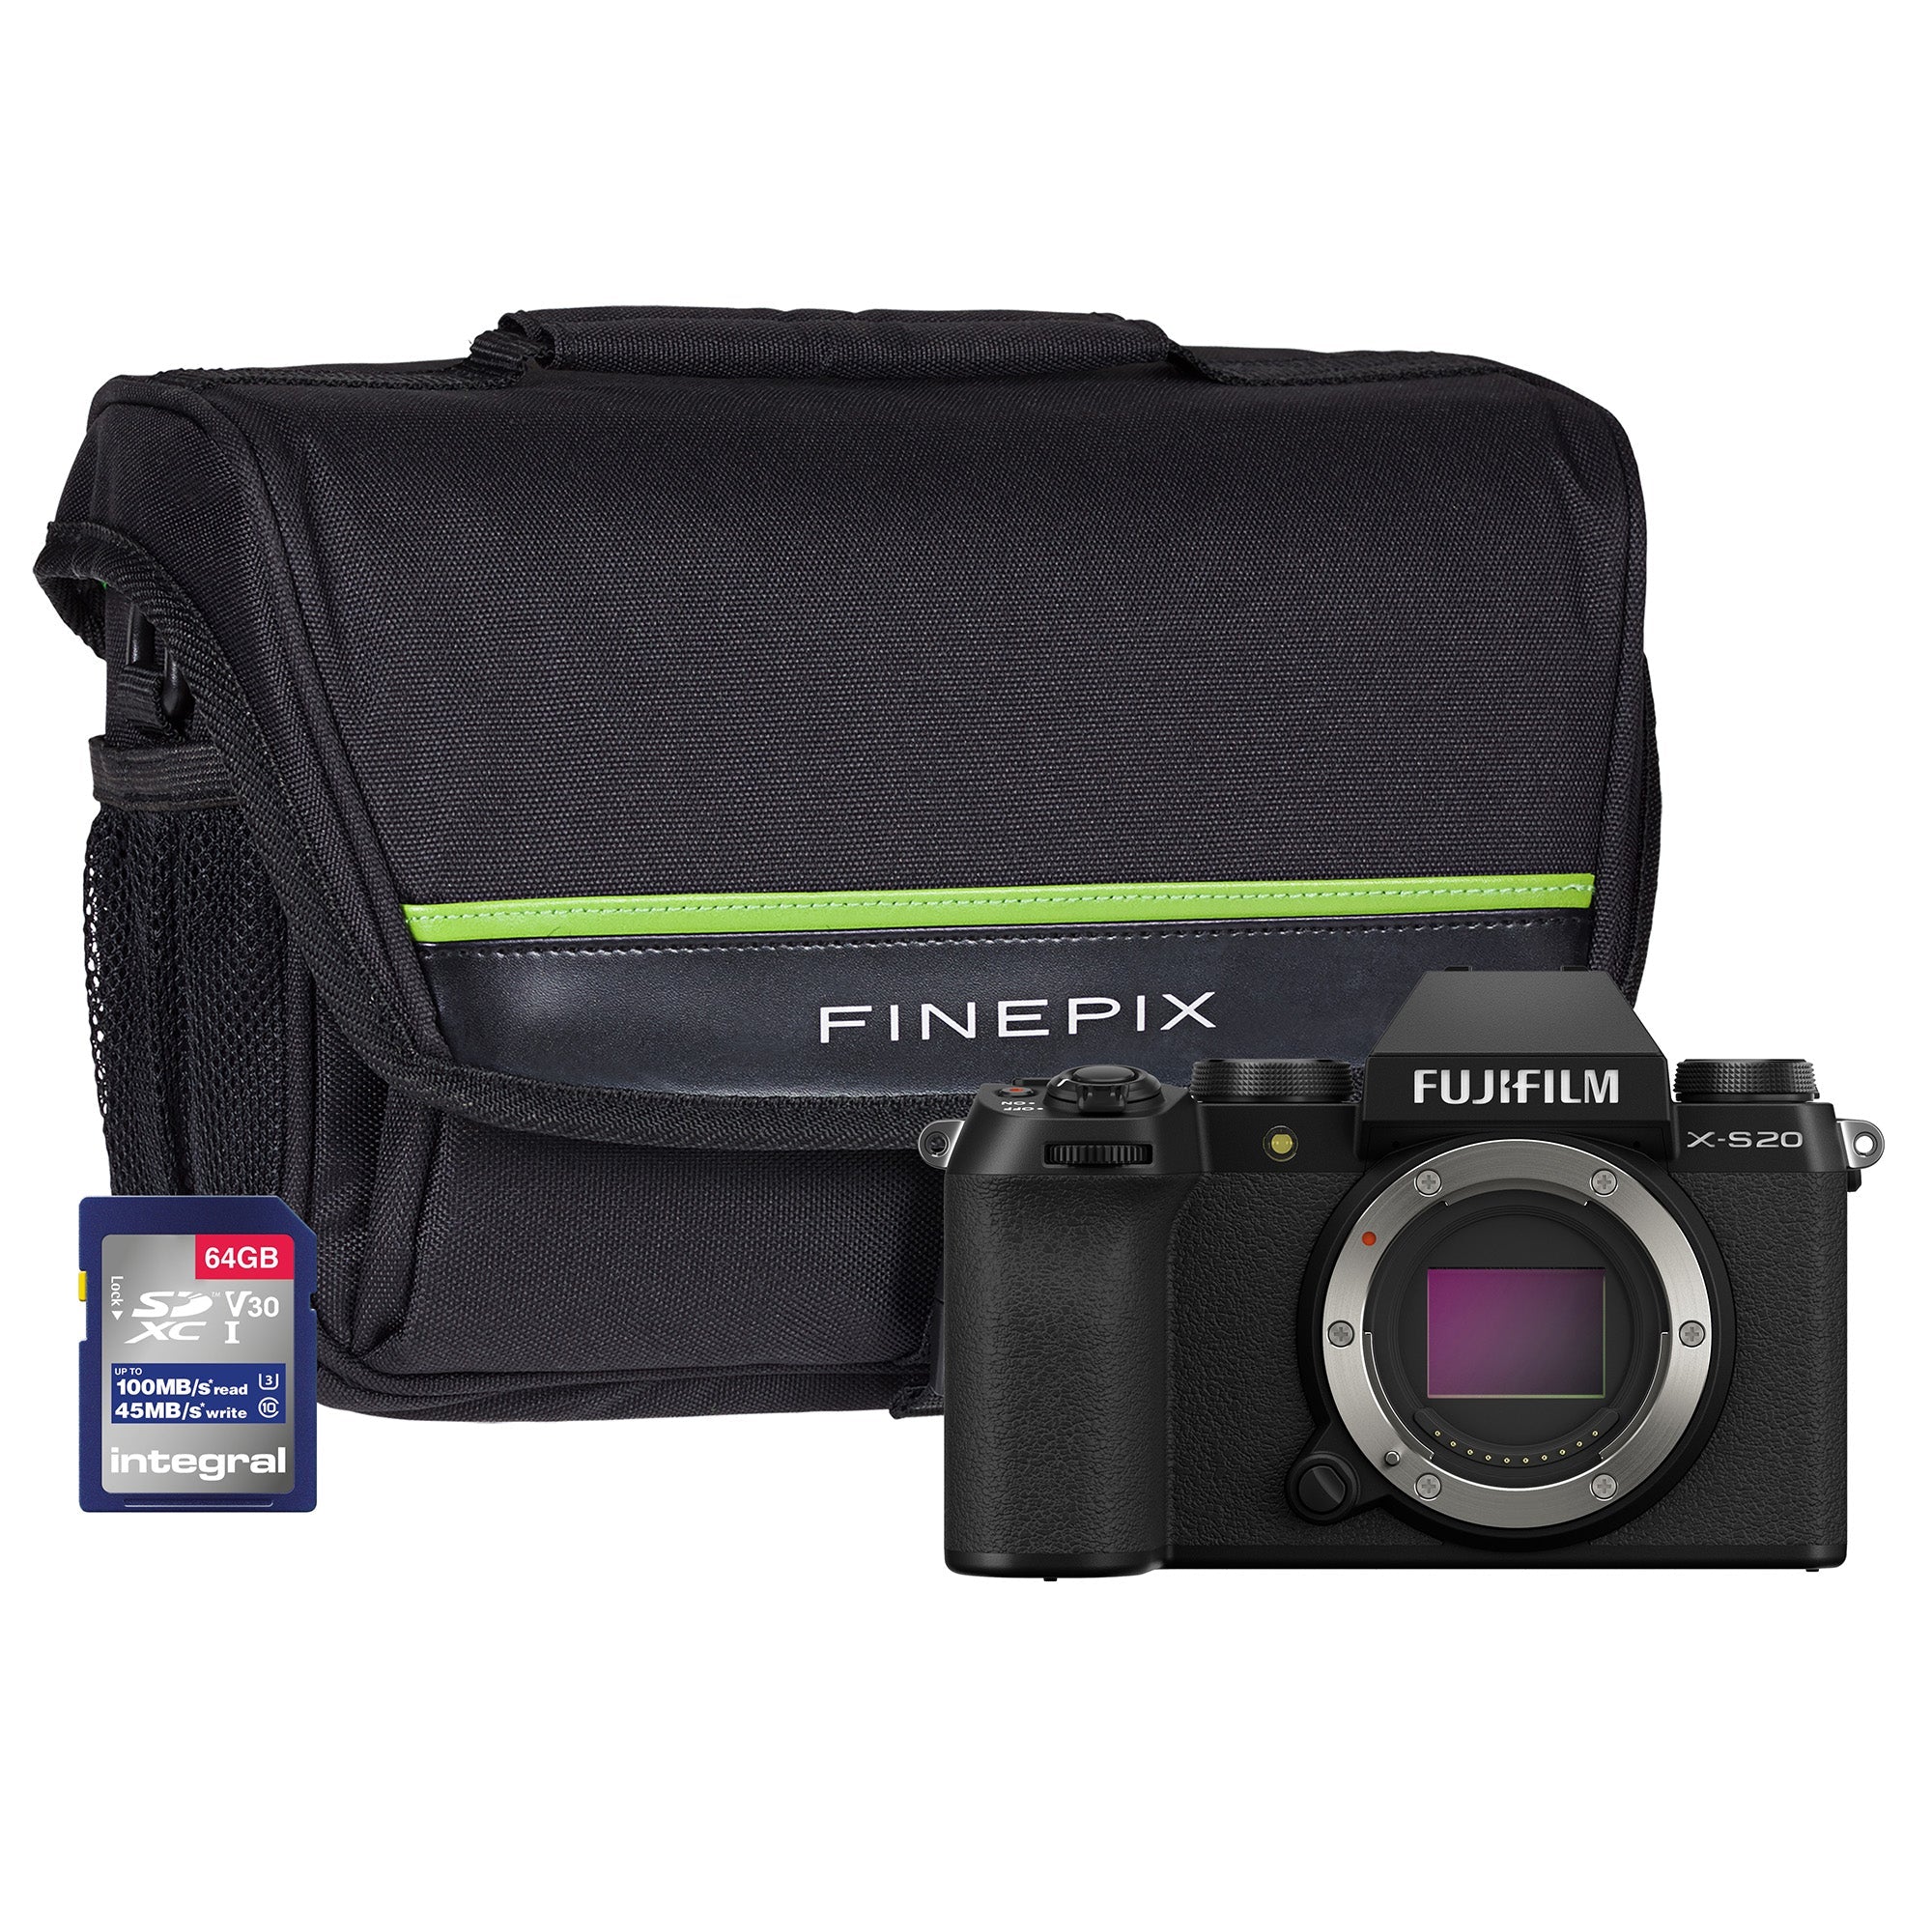 Fujifilm X-S20 Mirrorless Digital Camera - Black (Camera + 64GB SD Card + Case)